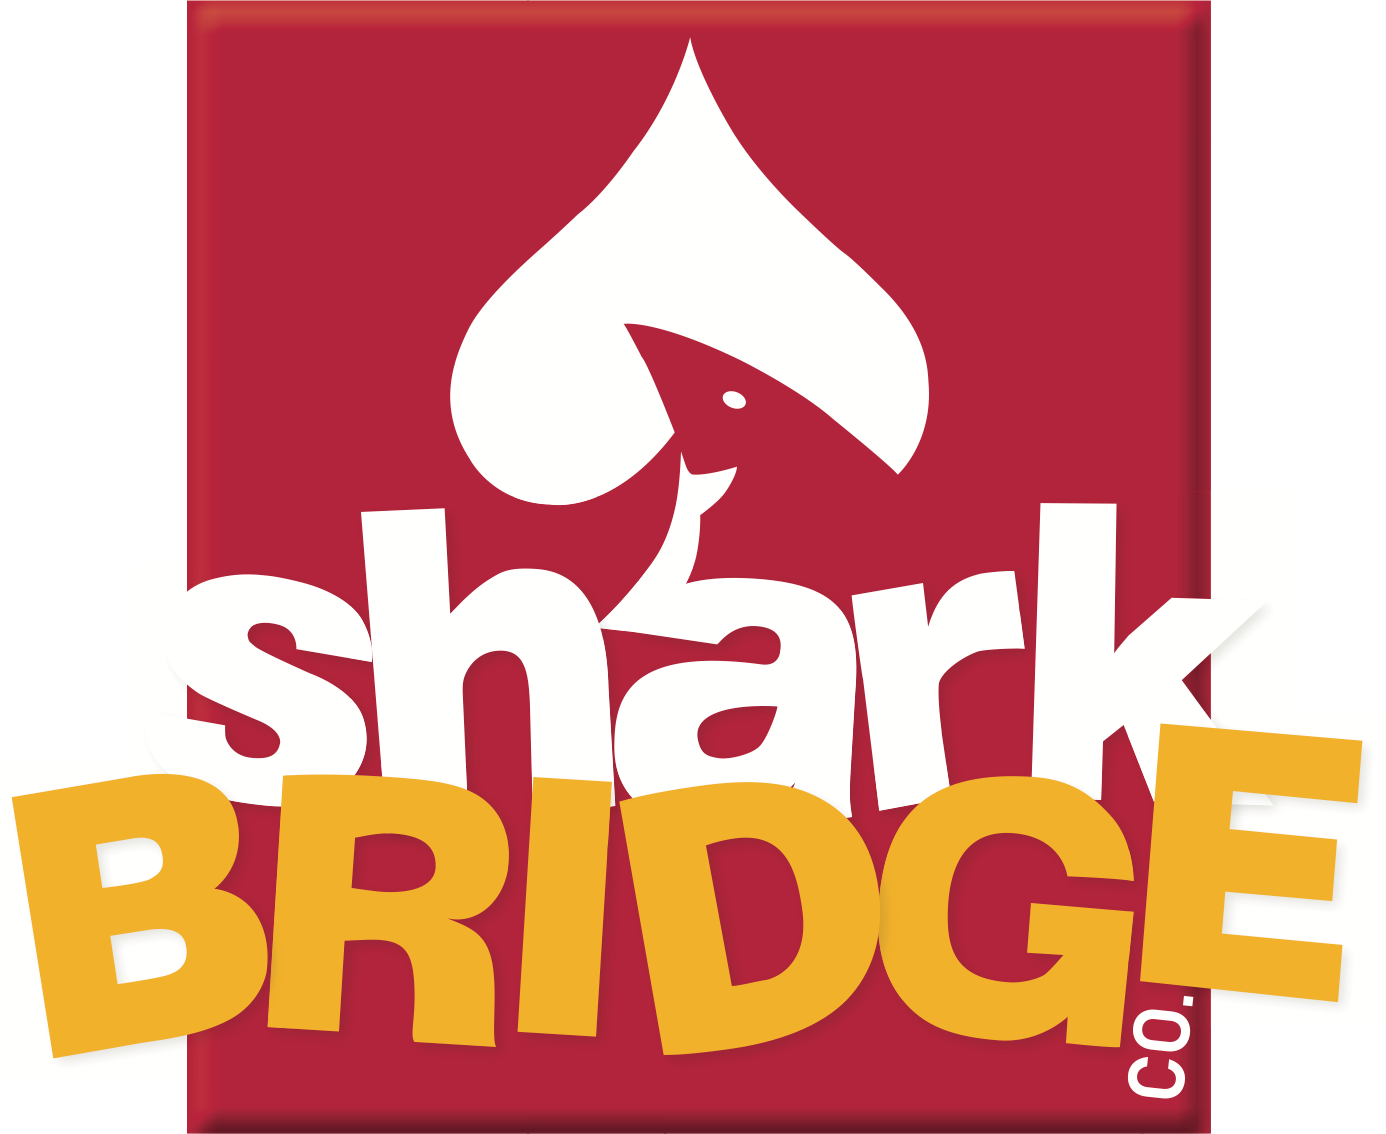 Learn Bridge Online - Practice Hand play, Bidding and Defense, Best e  Bridge